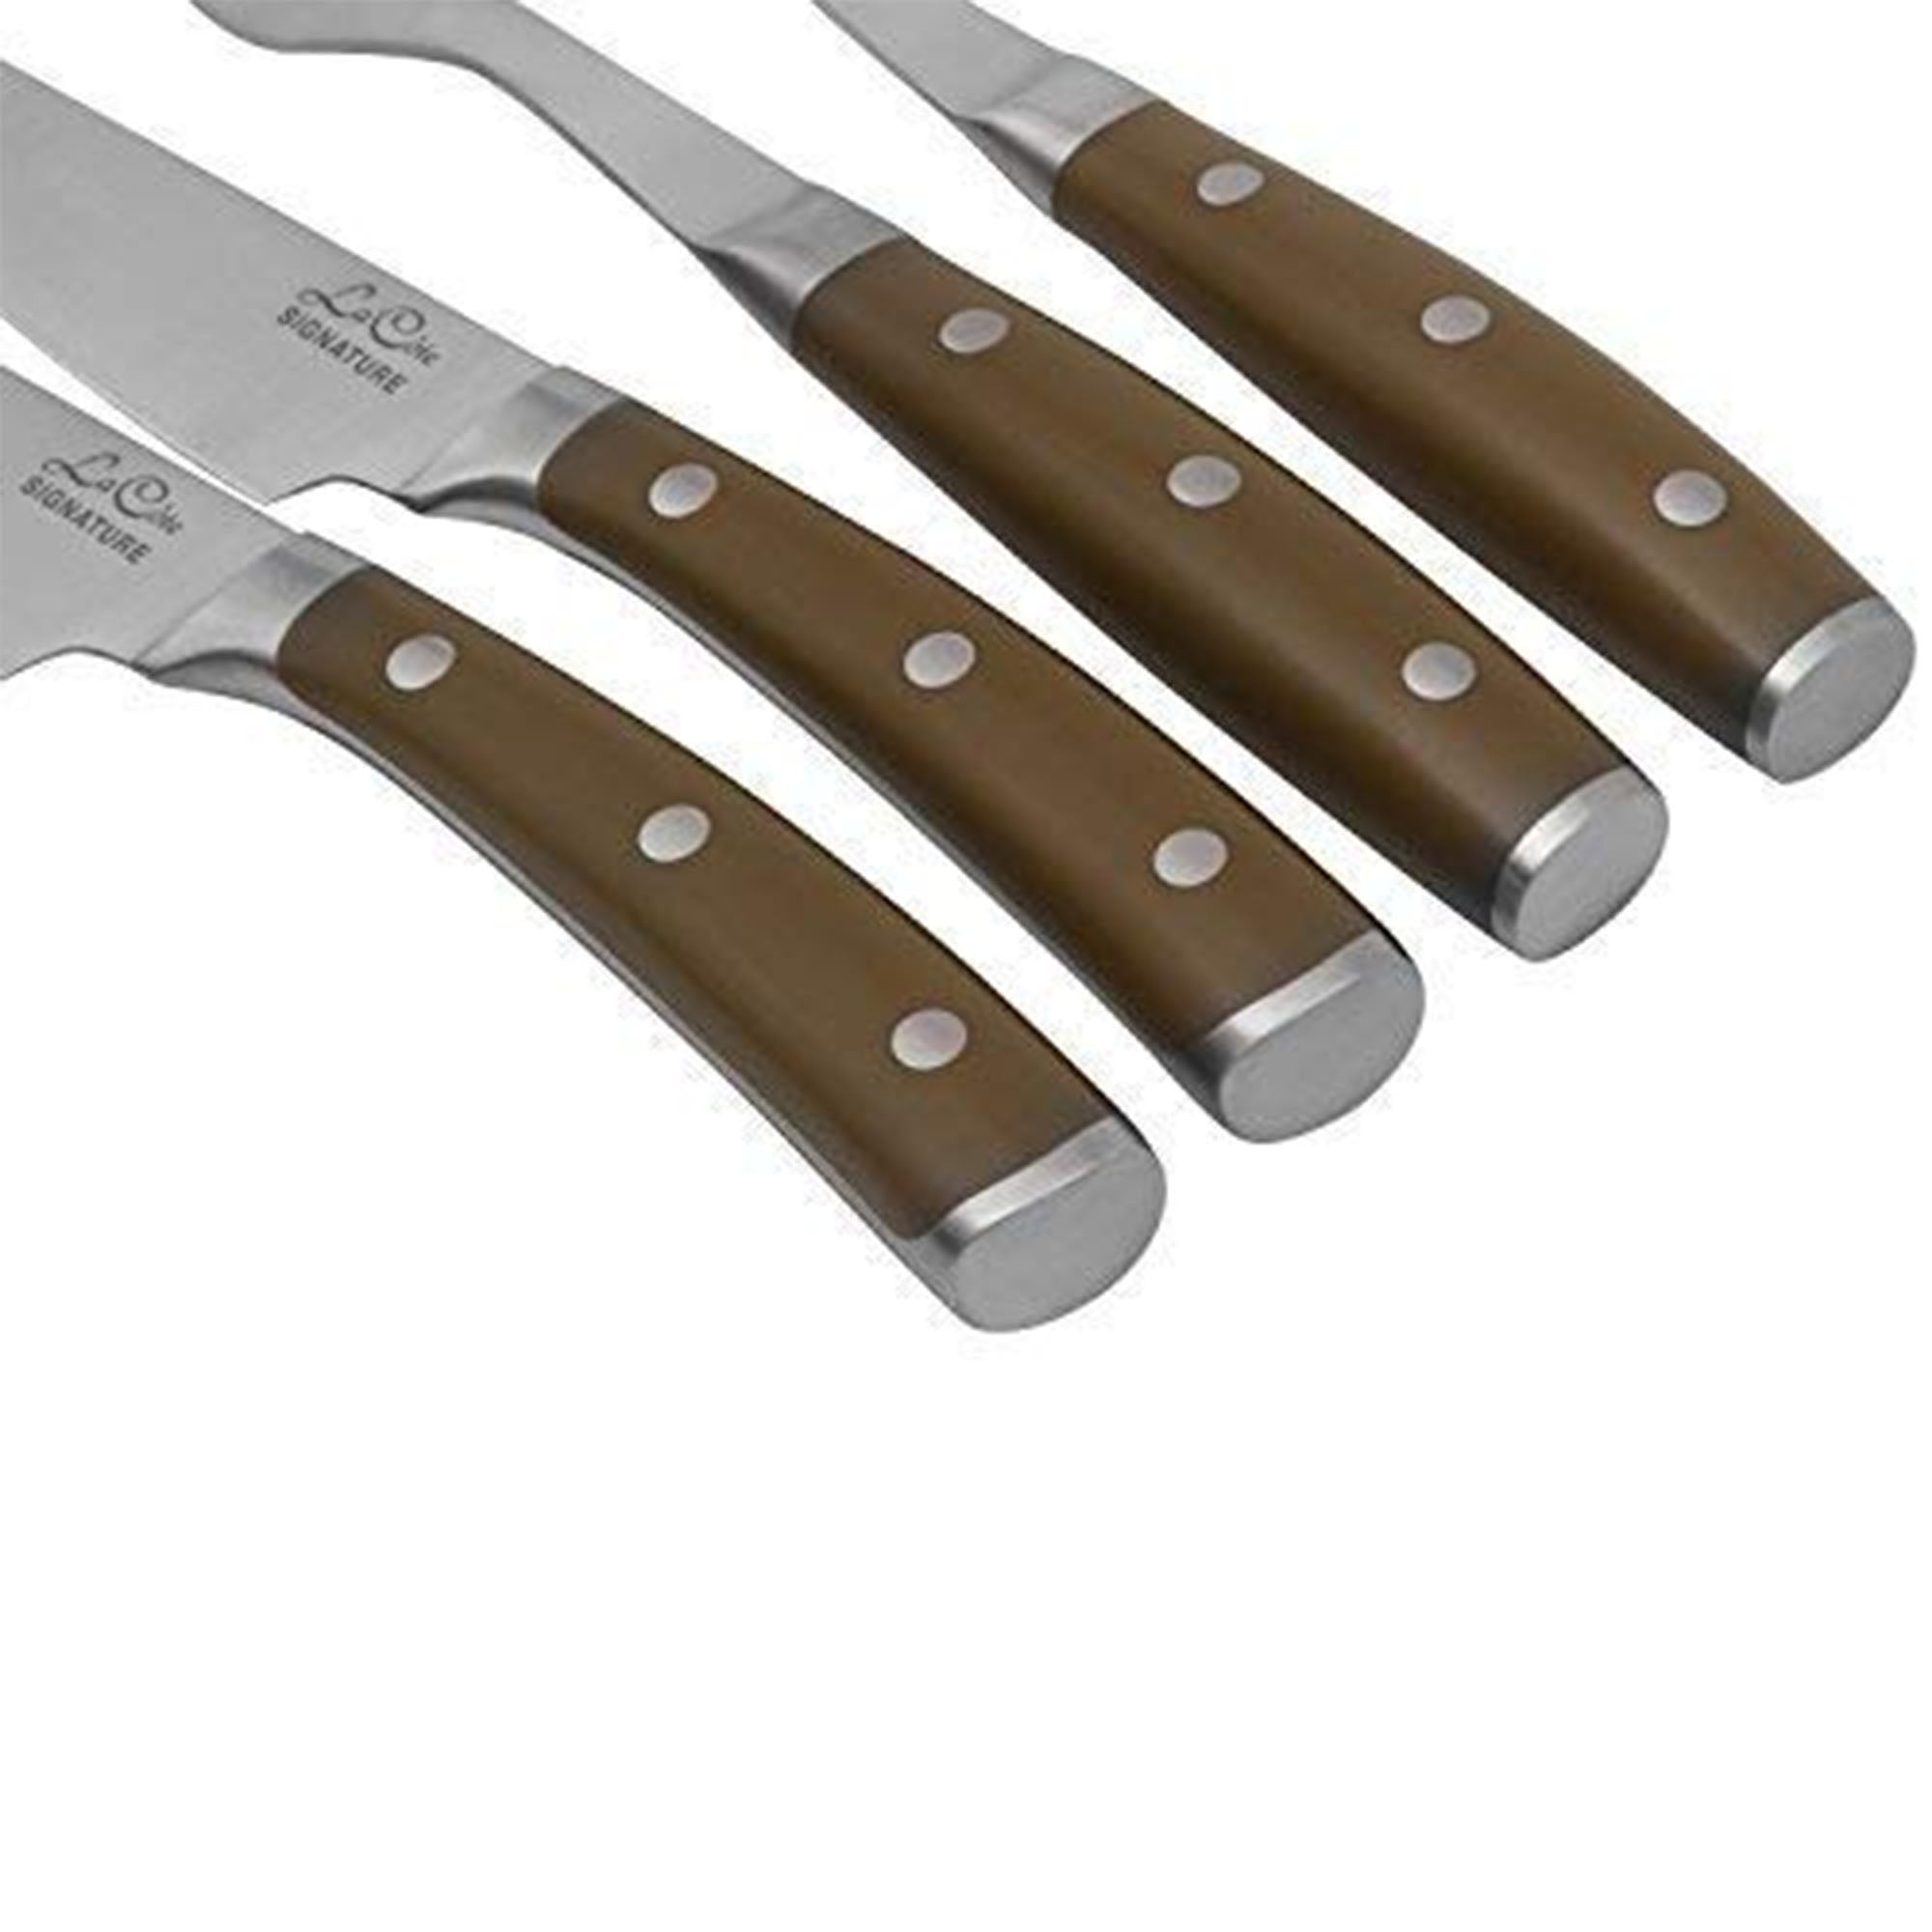 La Cote Signature Series Knife Set High Carbon German Steel ABS Handle (Steak Knives & Fork Set)